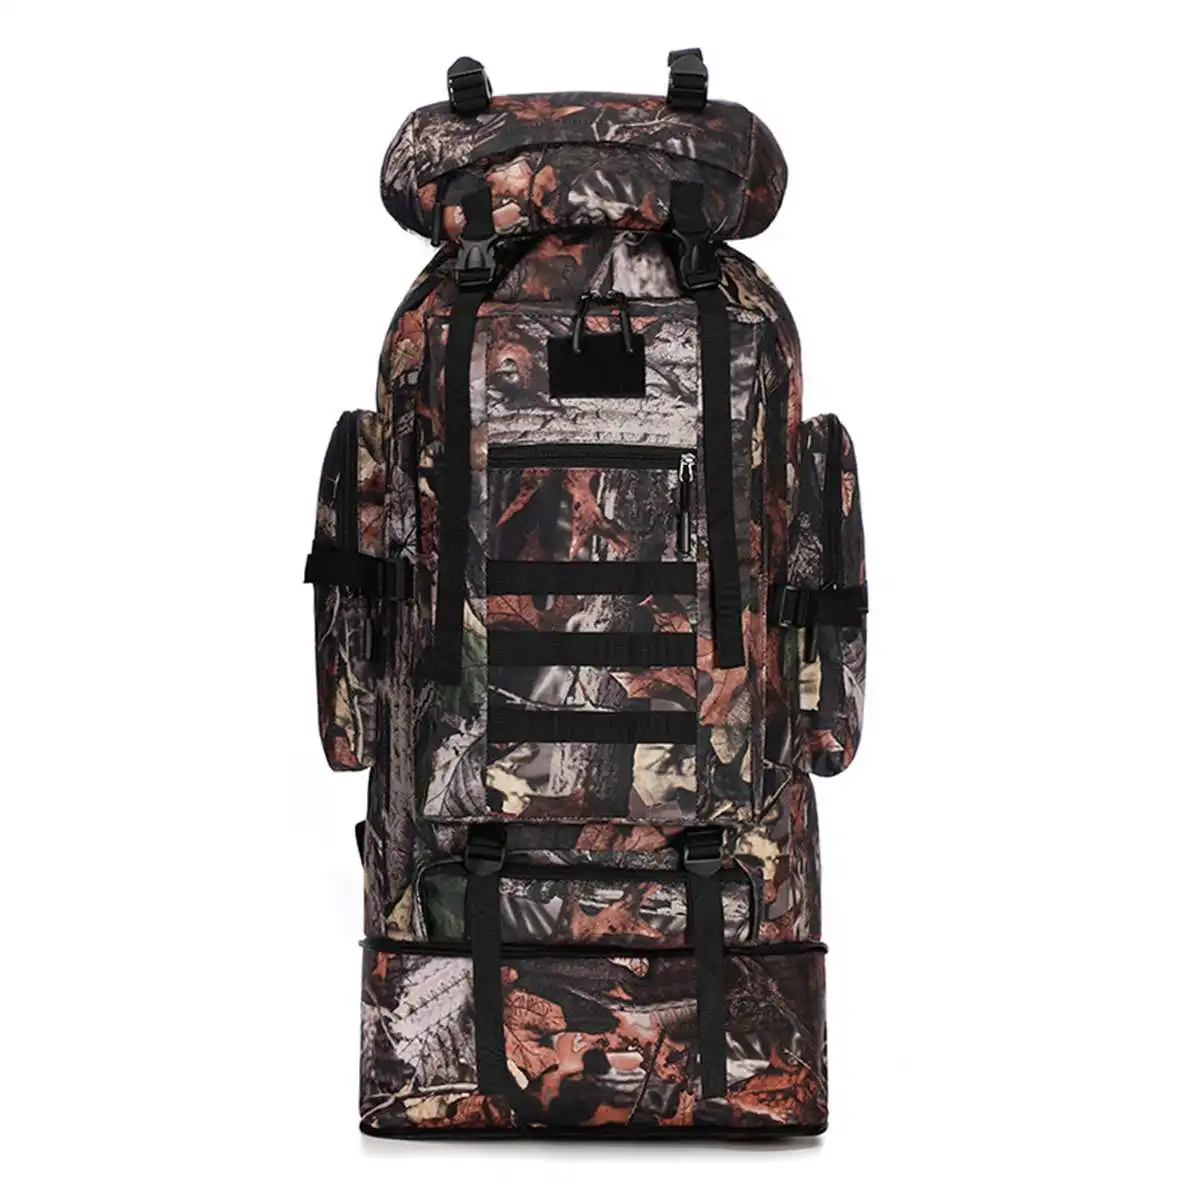 100L Hiking Backpack Camouflage New Travel Rucksack Sadoun.com